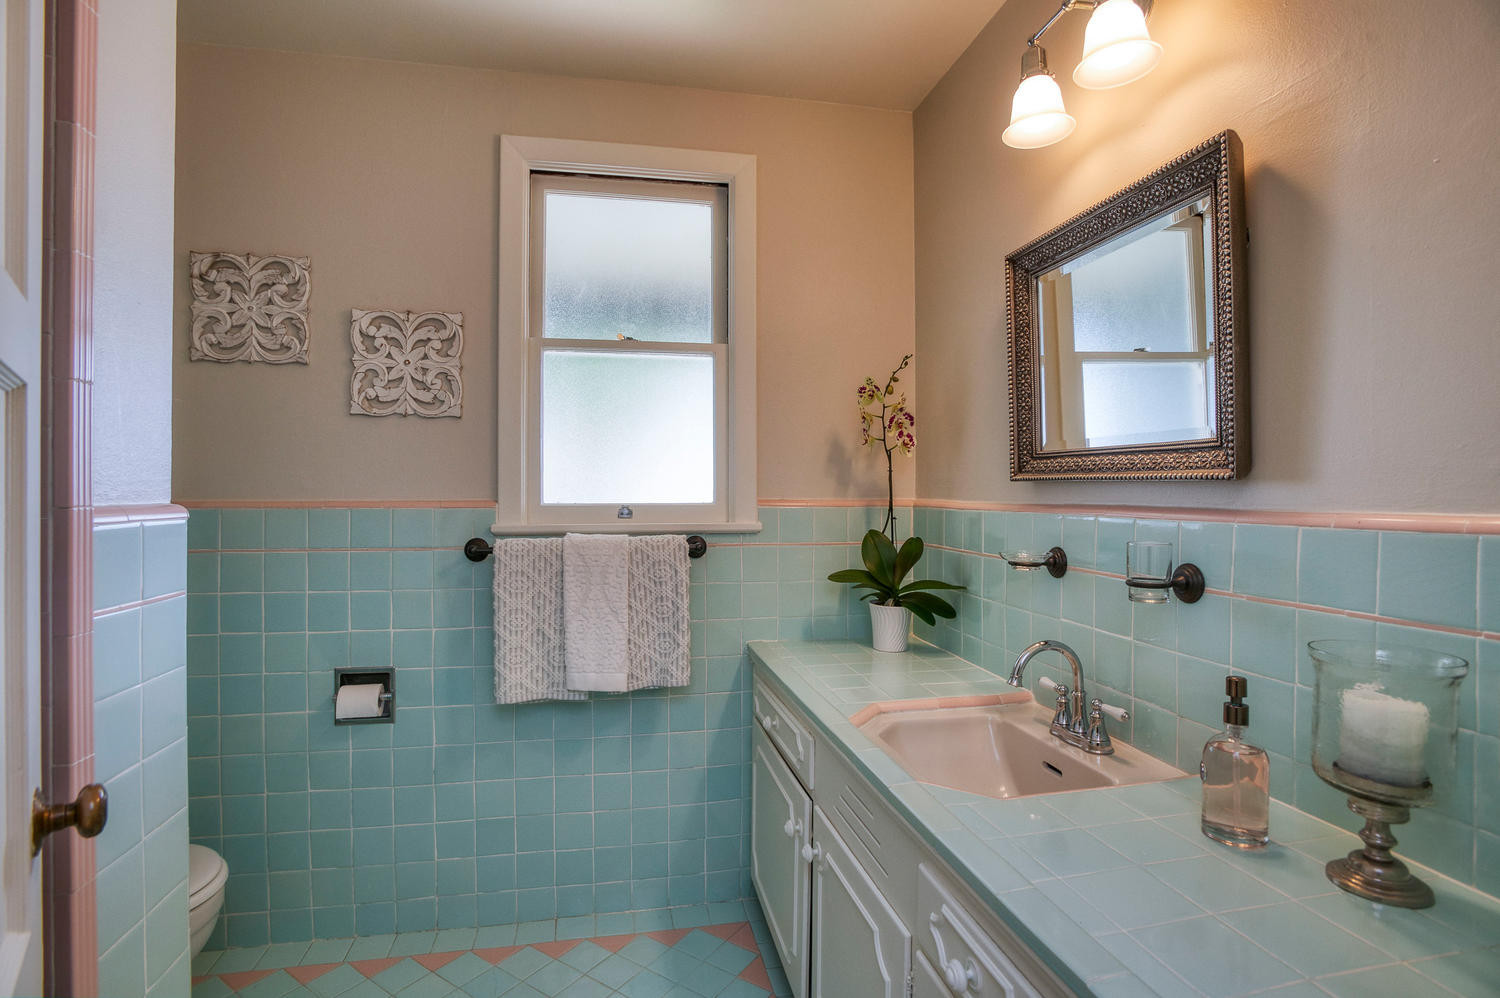 1625 Monte Corvino Way Bathroom Vanity in Ray Park Neighborhood in Burlingame.